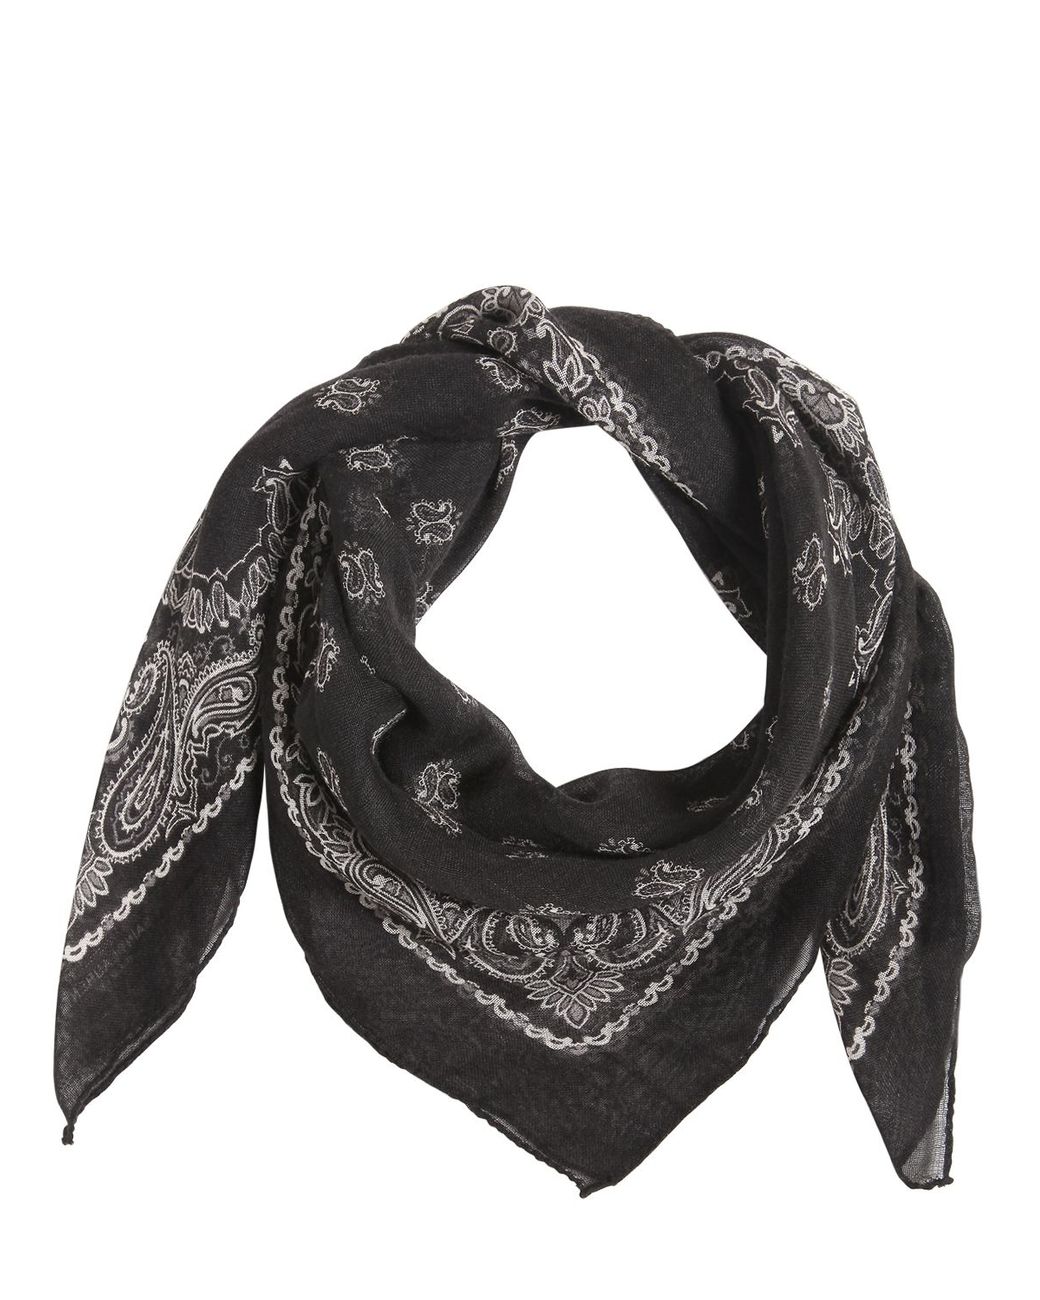 Saint Laurent Printed Silk Cashmere Bandana Scarf in Black | Lyst